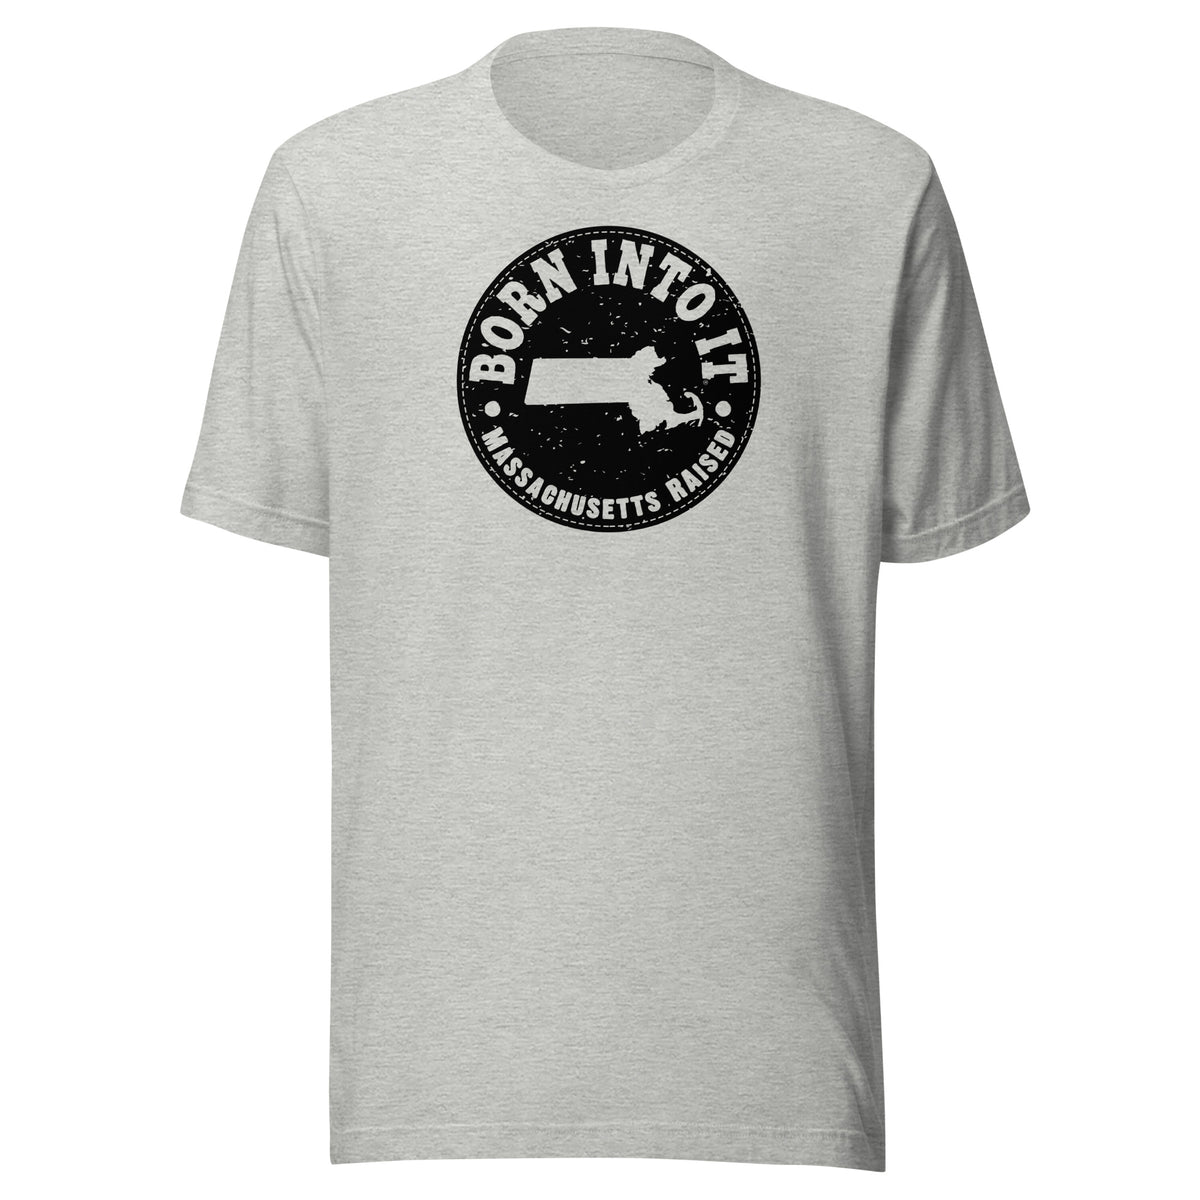 Massachusetts Raised Unisex T-Shirt